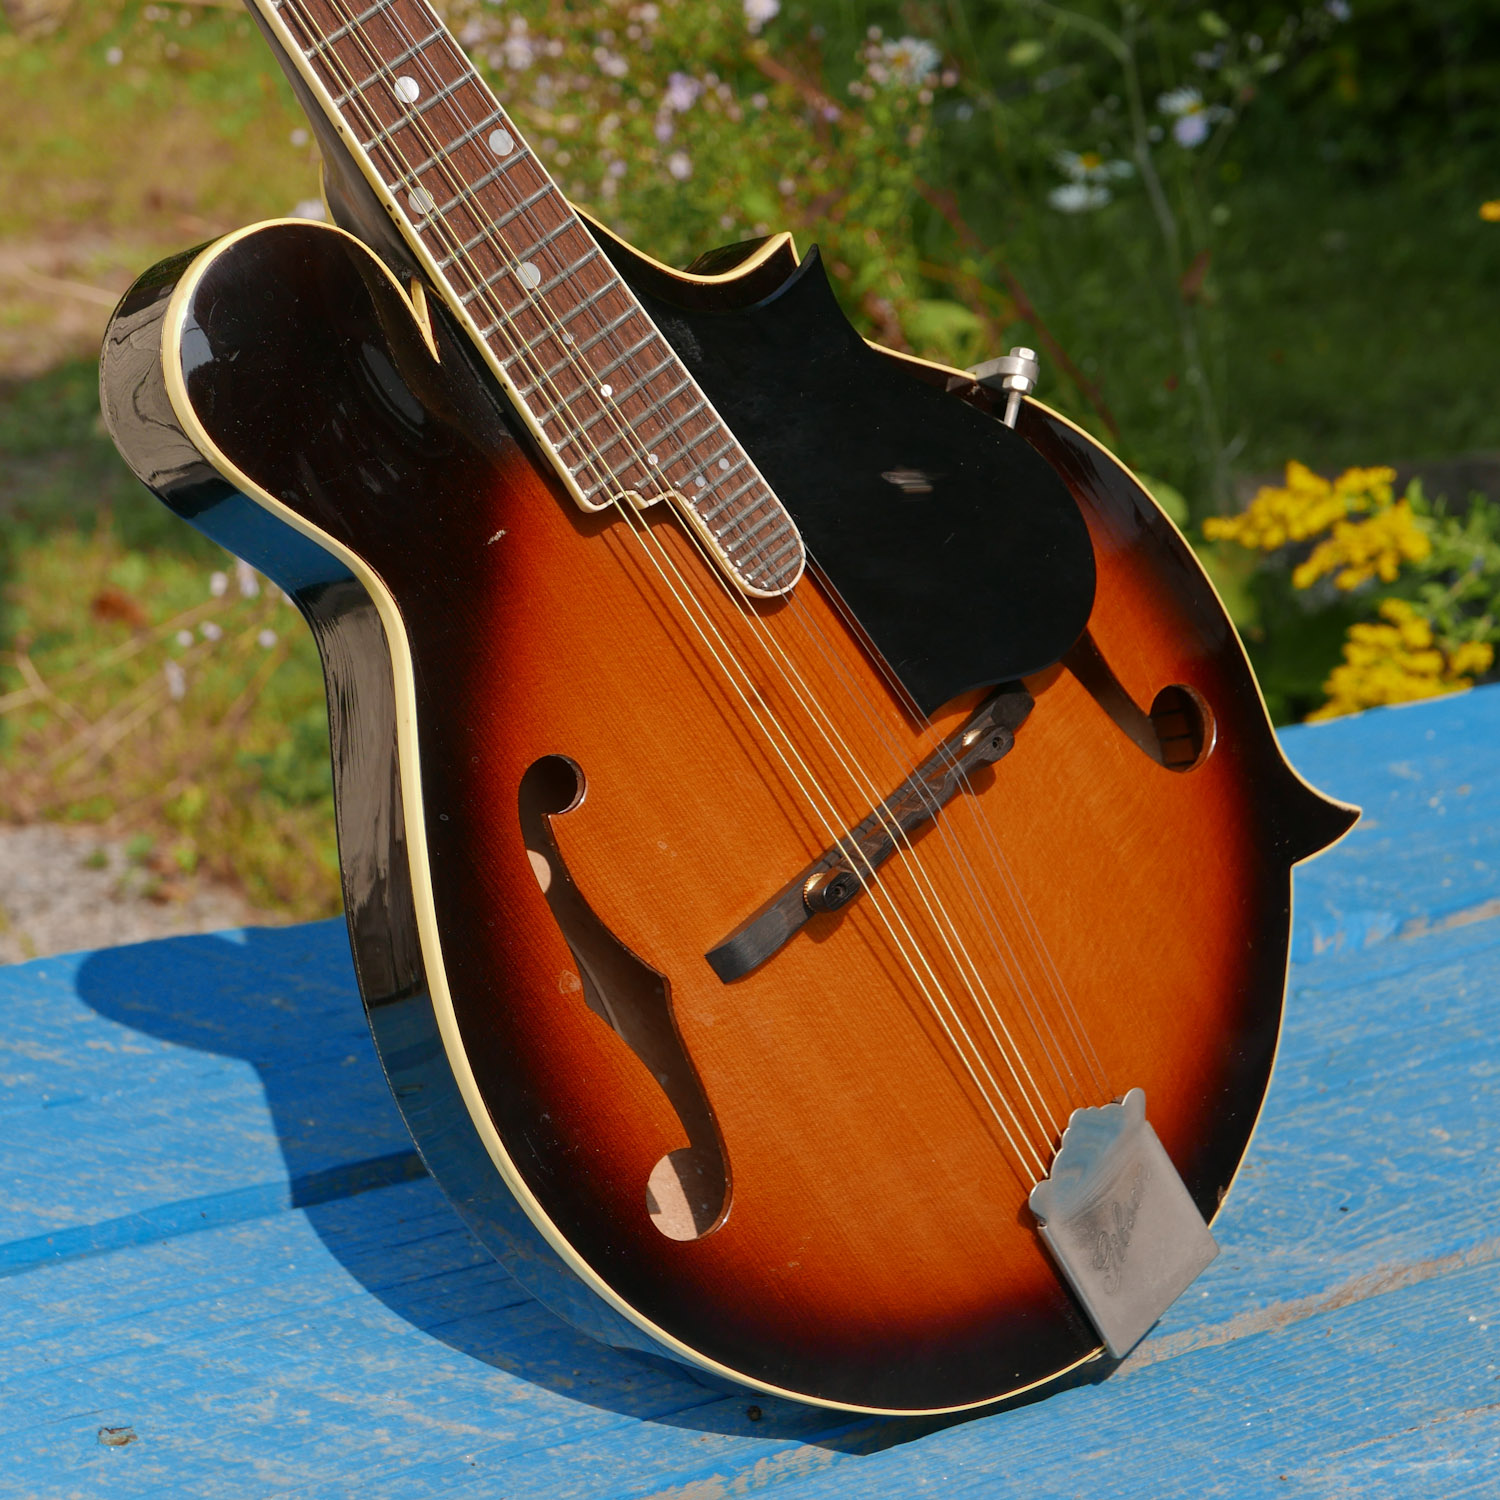 dating Gibson mandolin serienummer nøyaktigheten av fosterets ultralyd dating